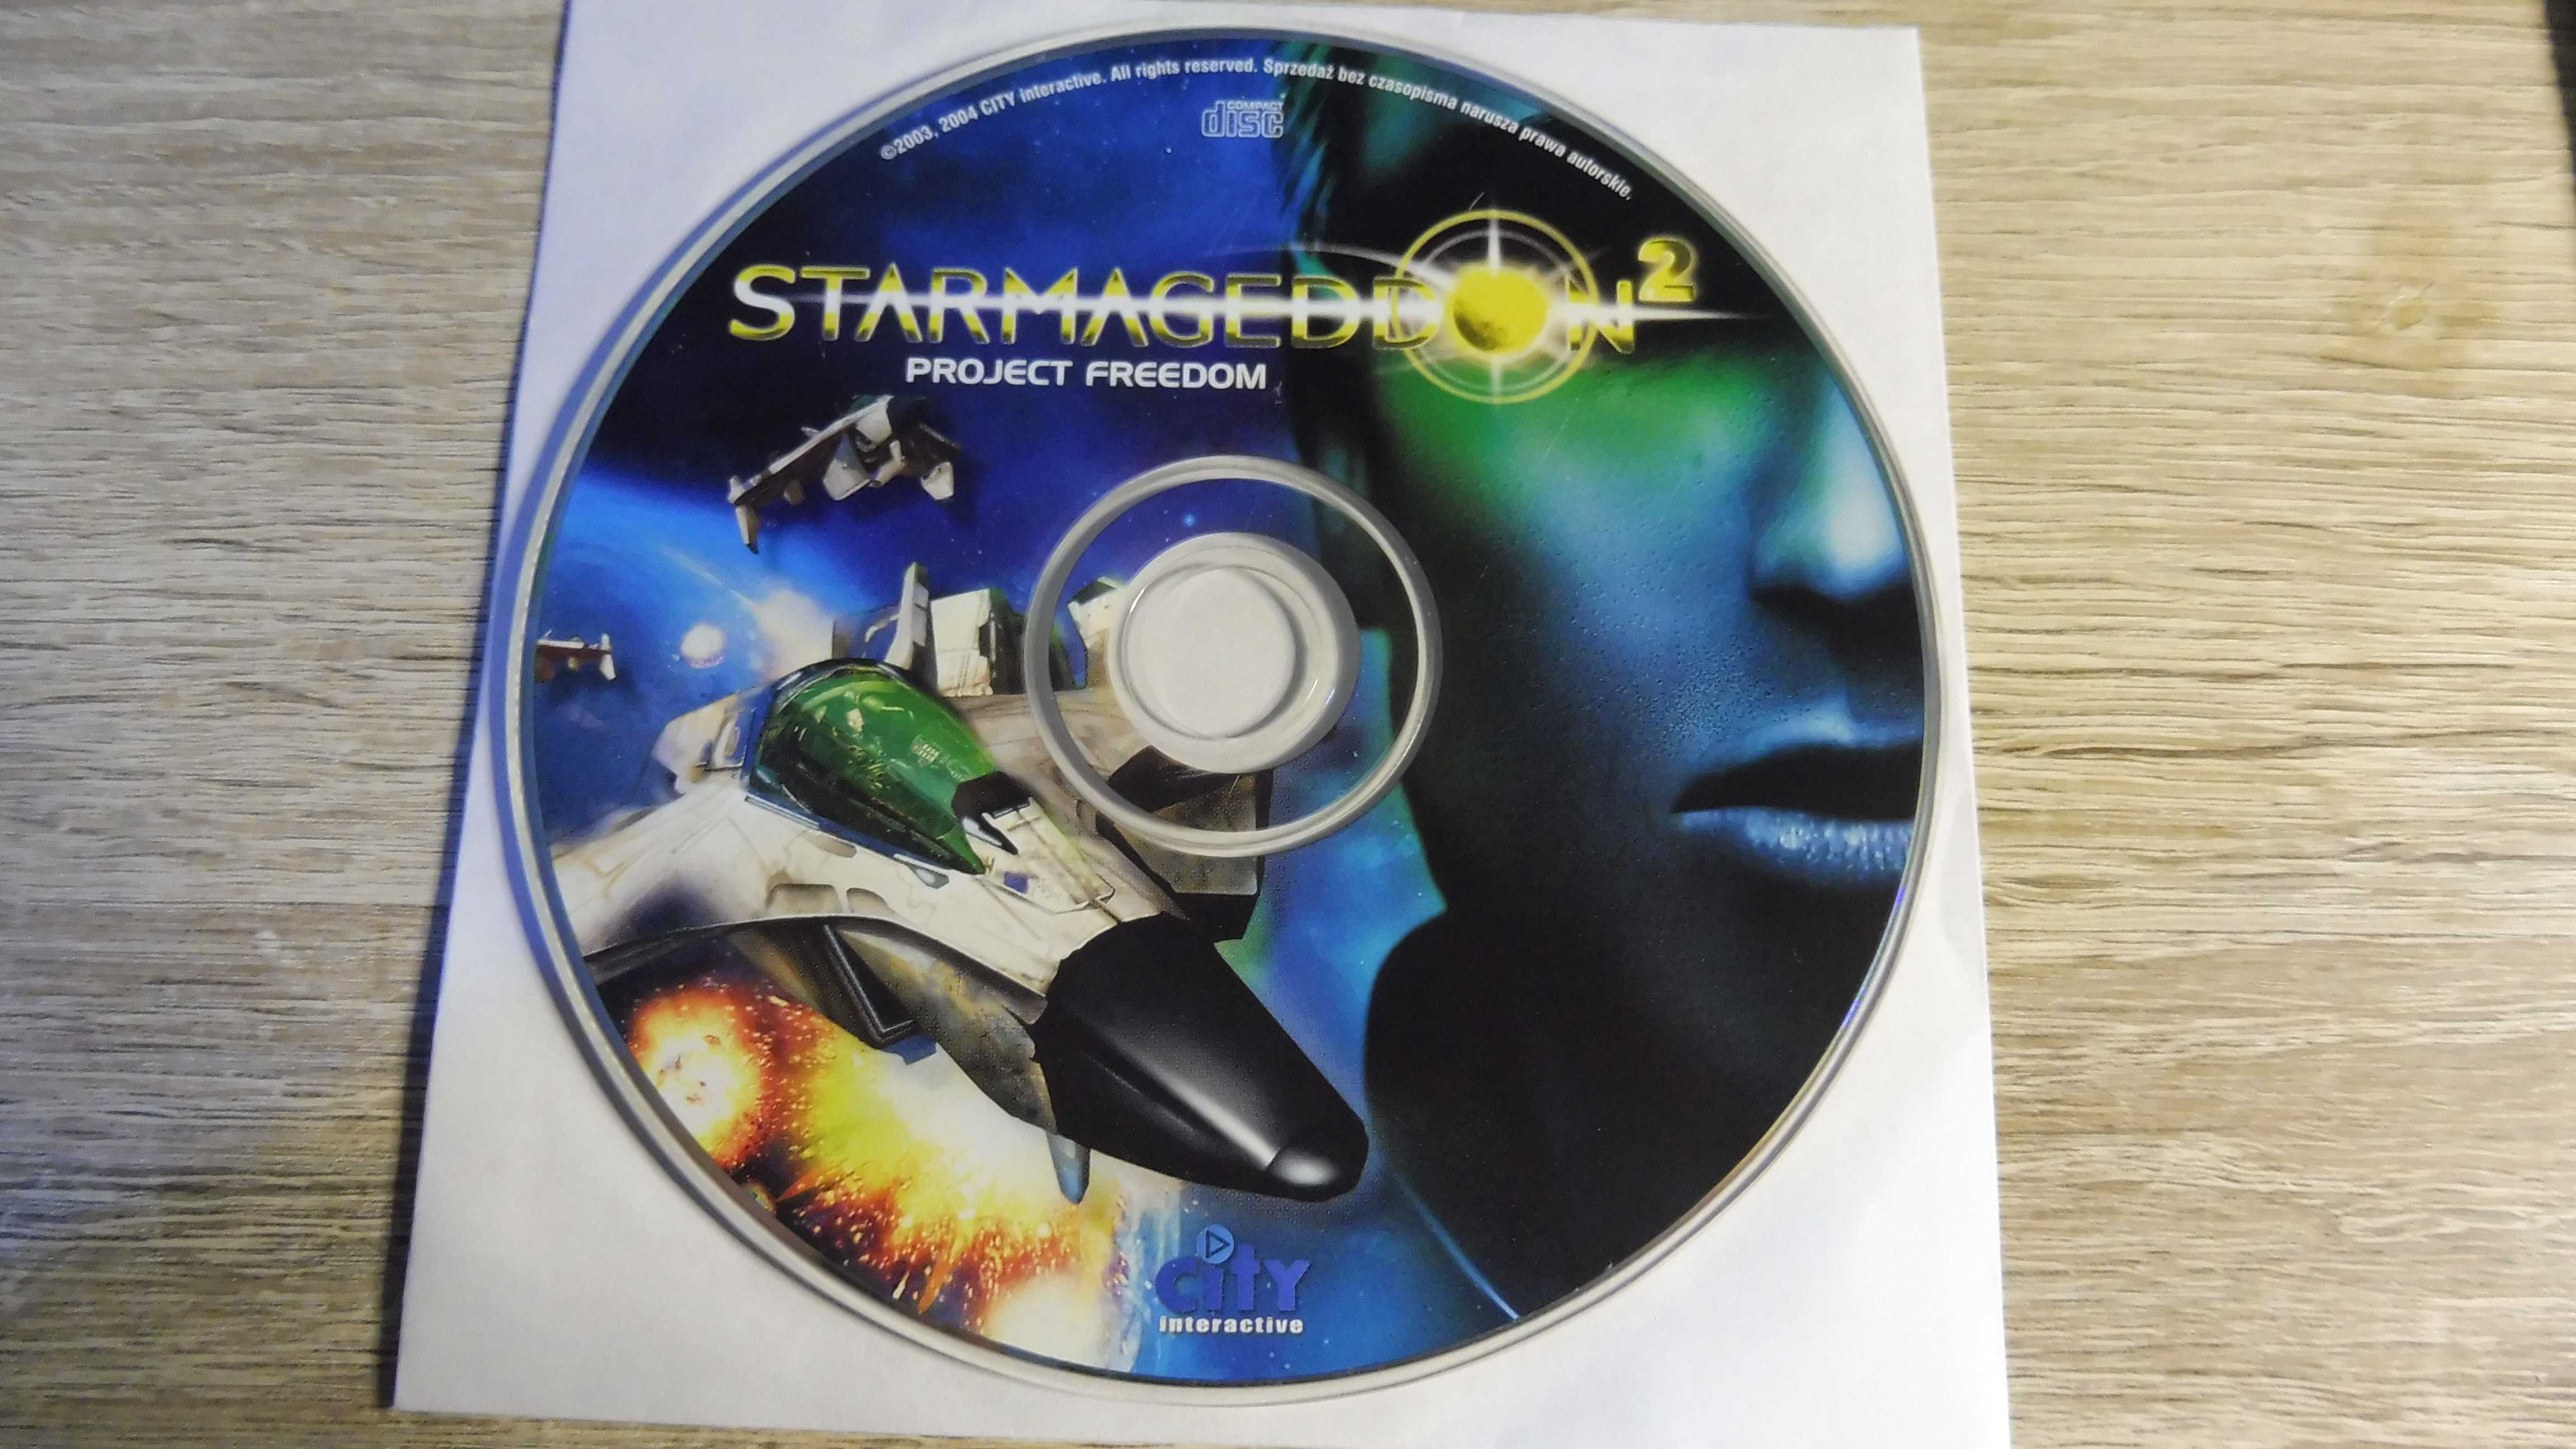 Starmageddon 2 Project Freedom - CD Action